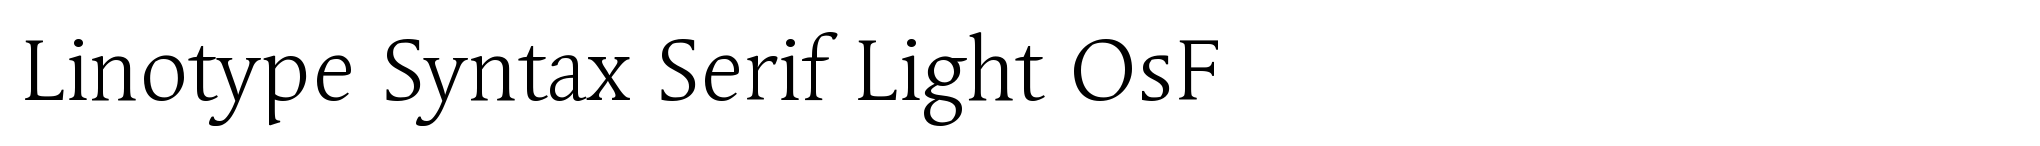 Linotype Syntax Serif Light OsF image